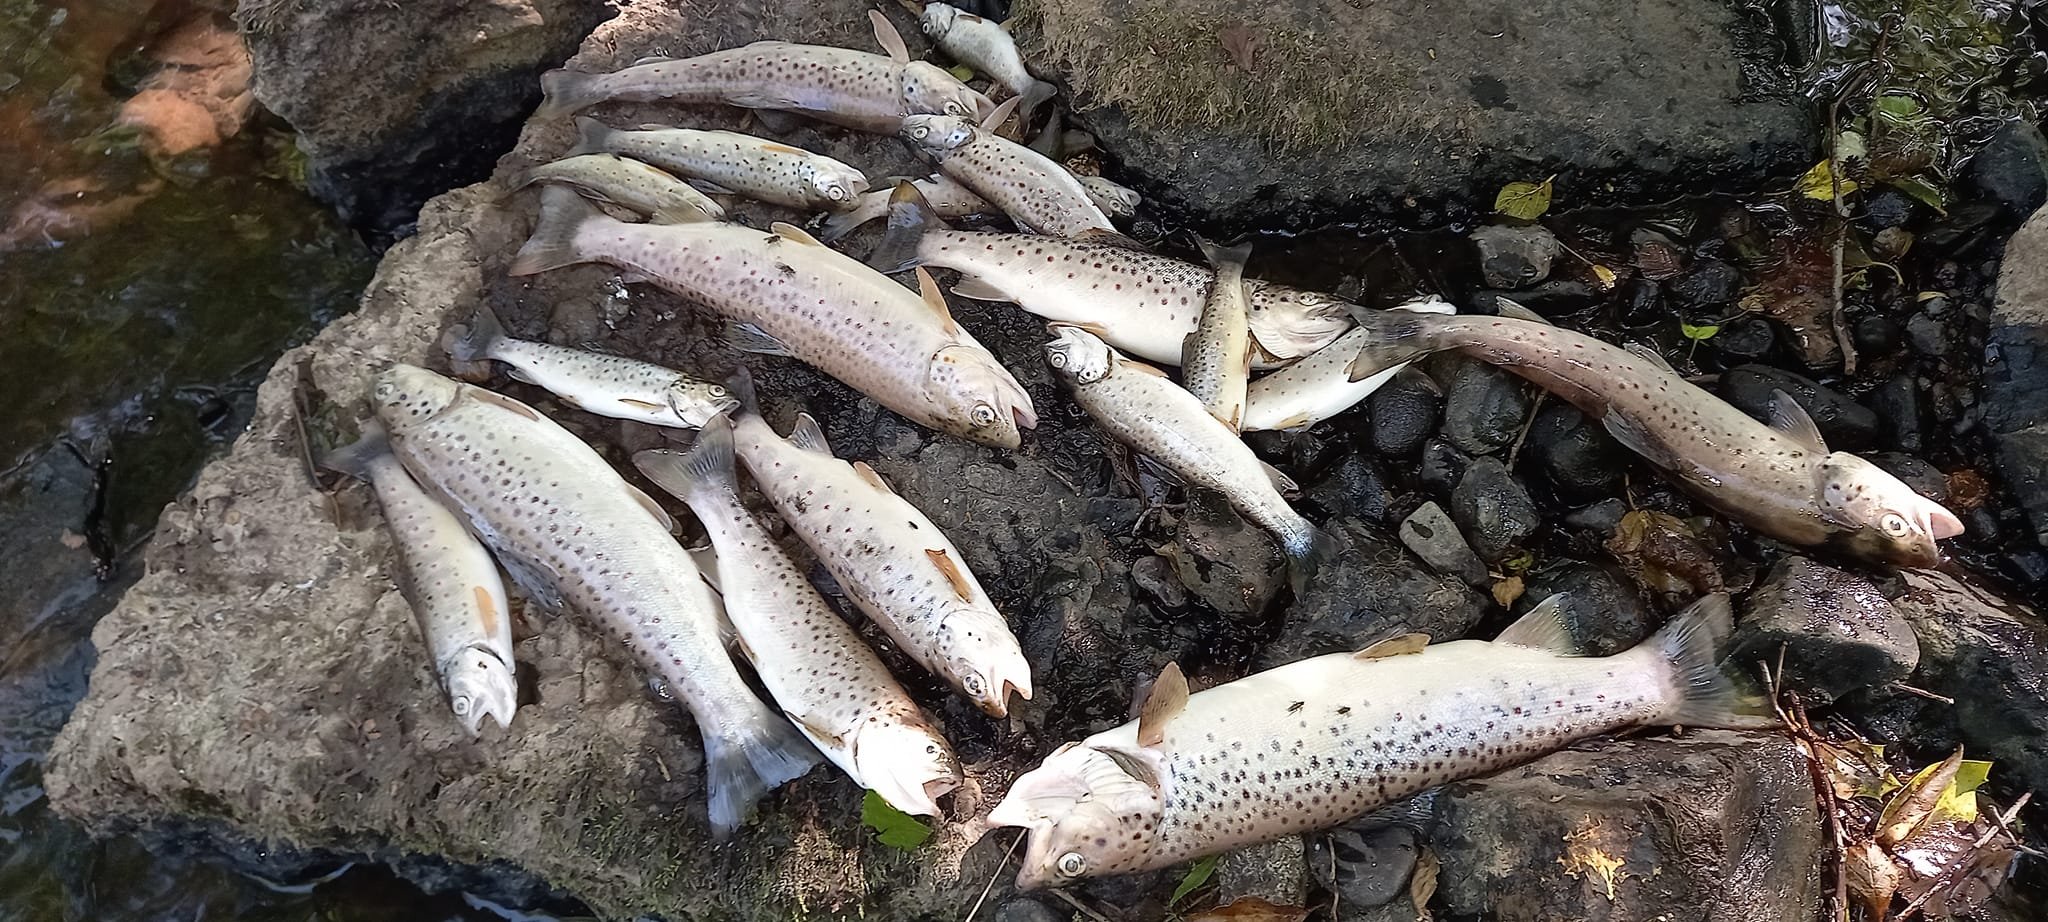 Huge fish kill along Coalisland Canal